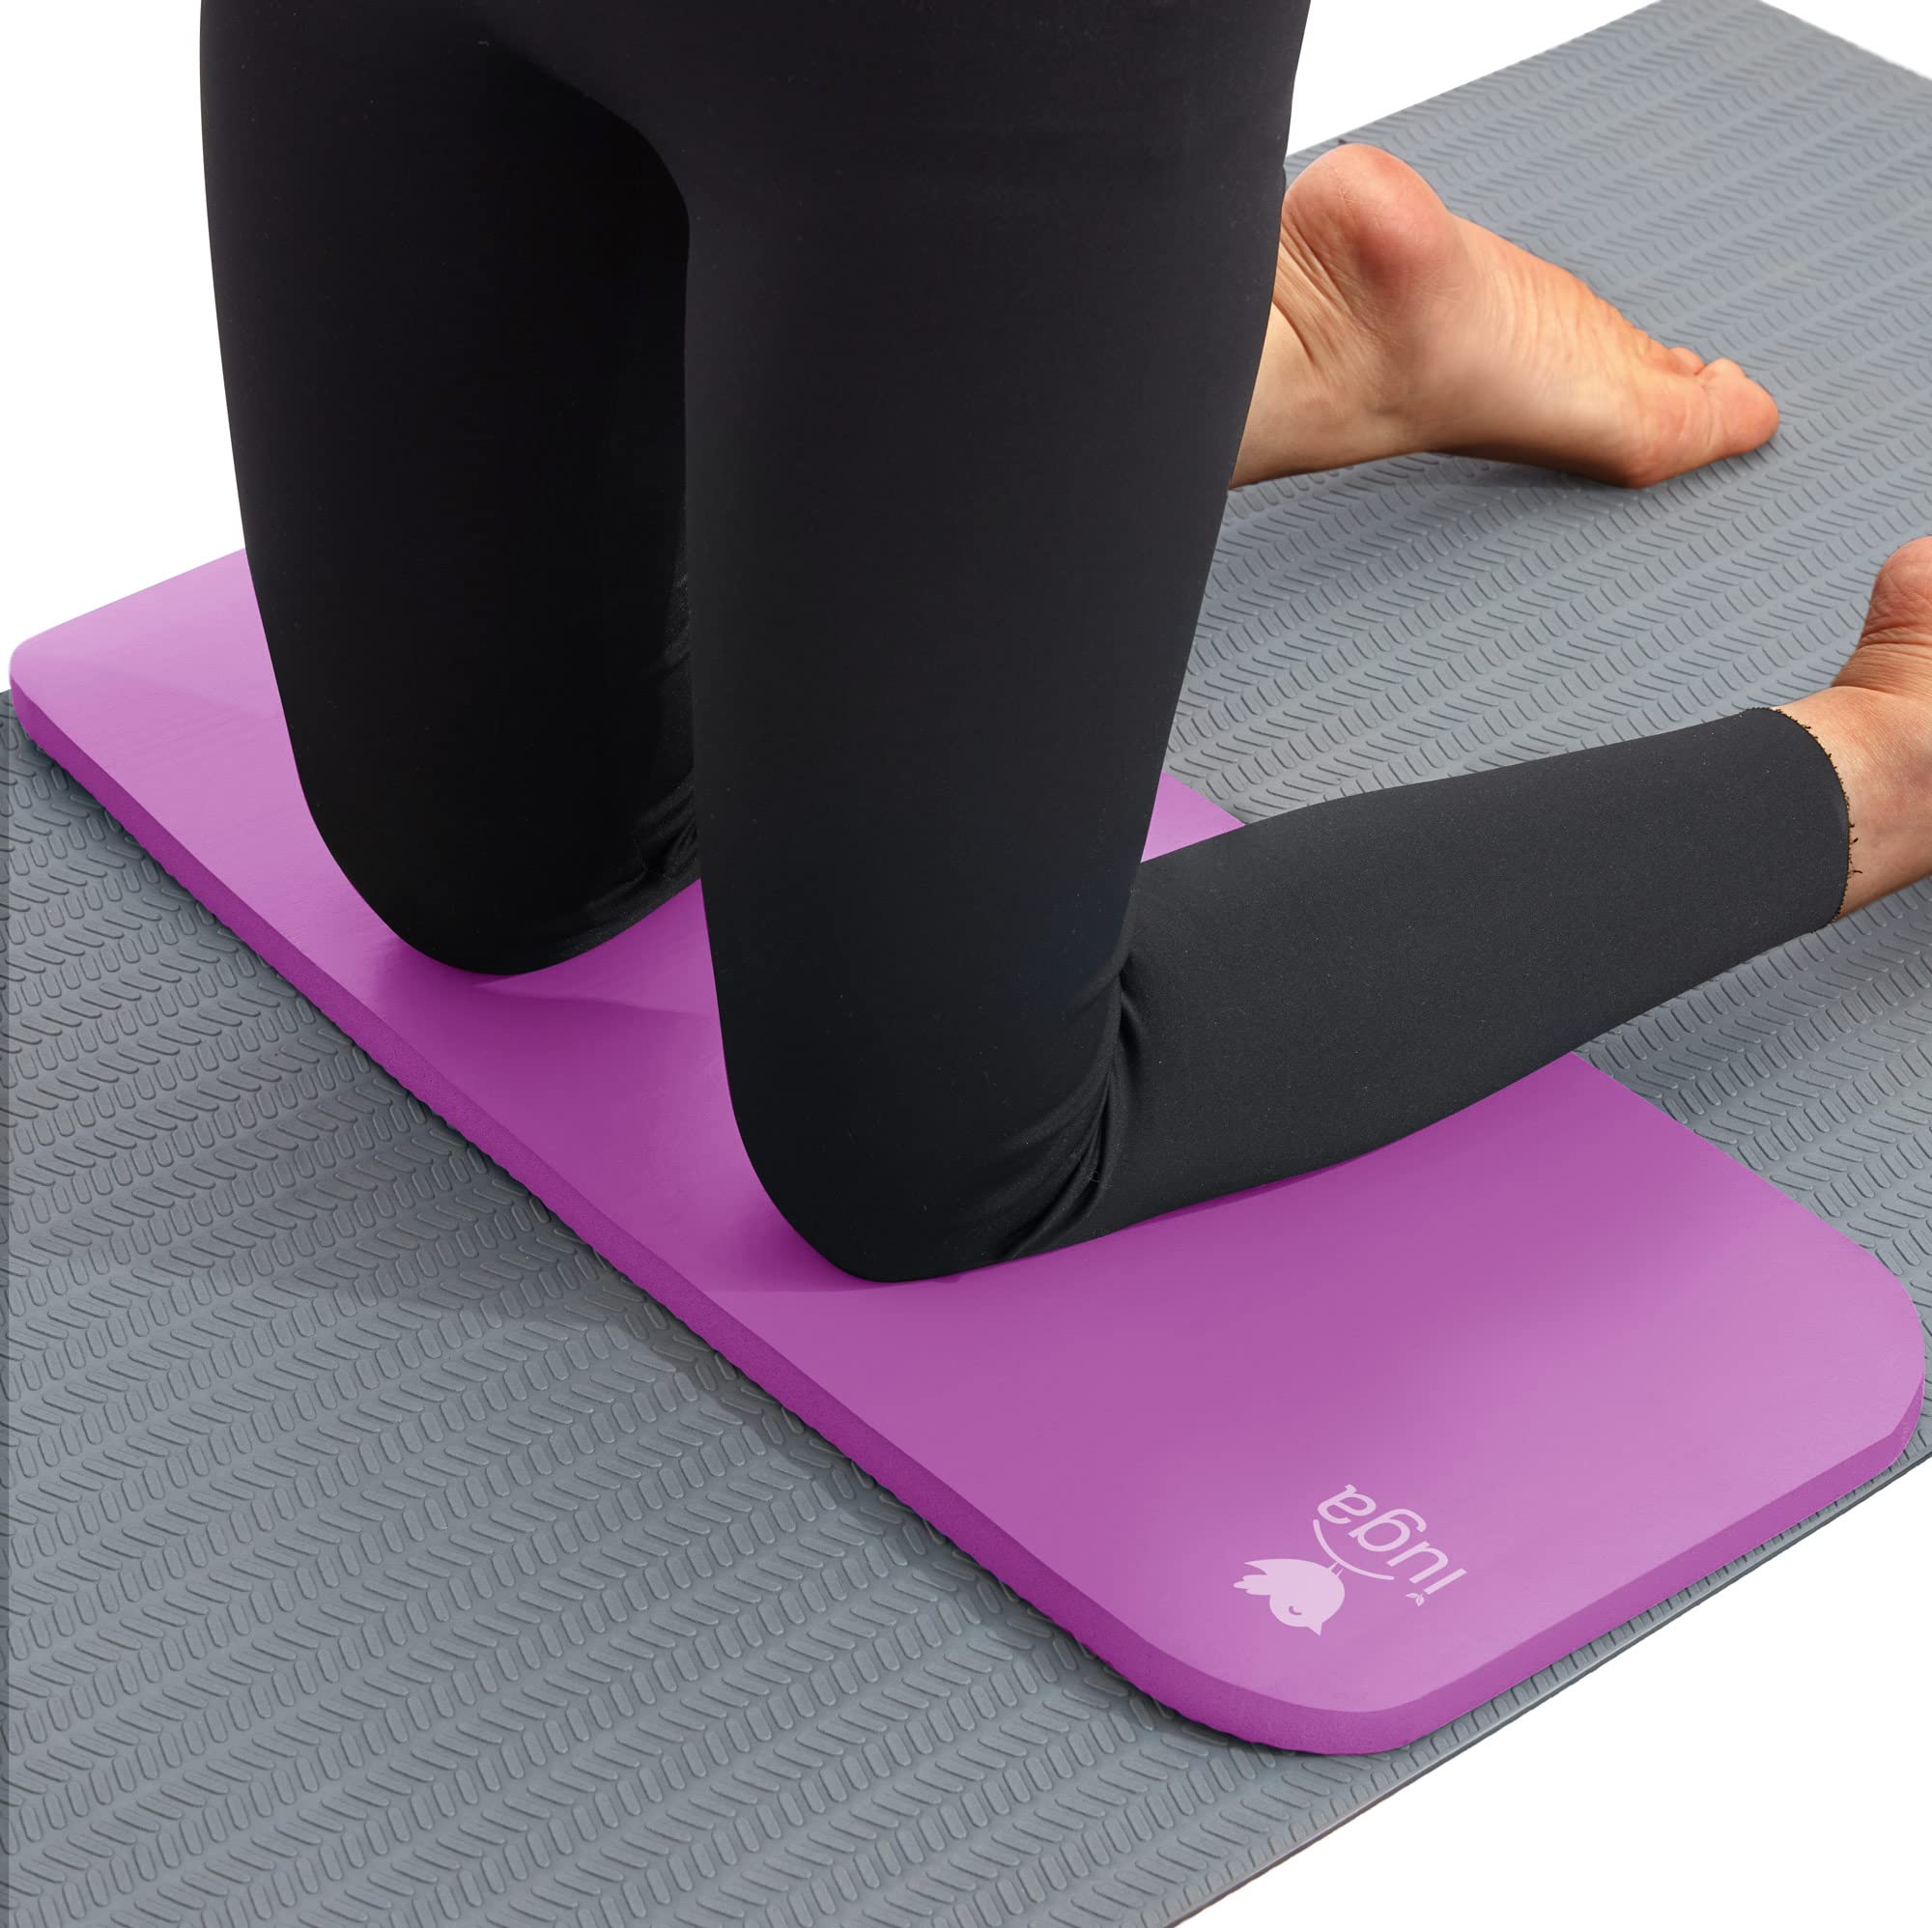 60*25cm Yoga Knee Pads Wrist Support Hip Hand Yoga Mat Anti-slip